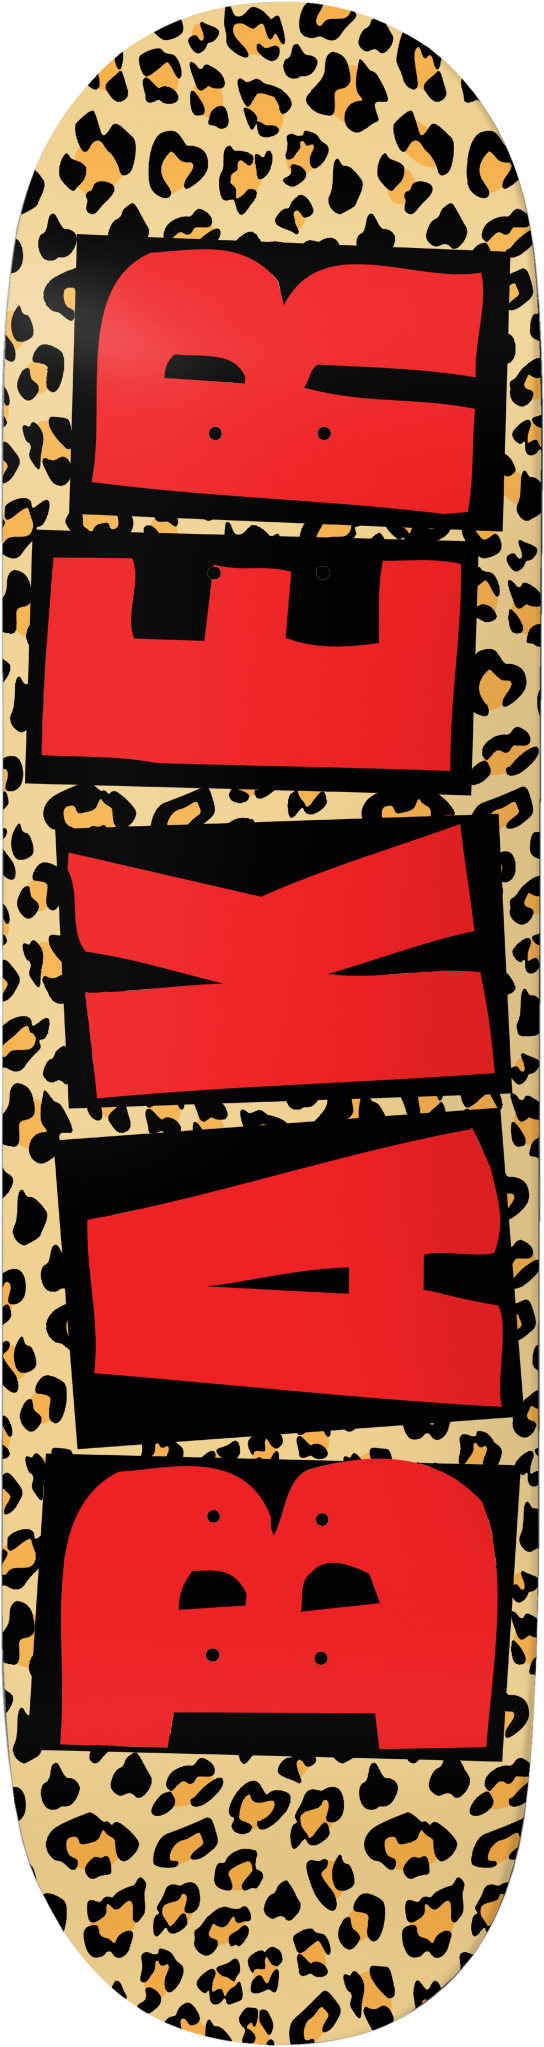 BAKER- Brand Logo Cheetah 8.5